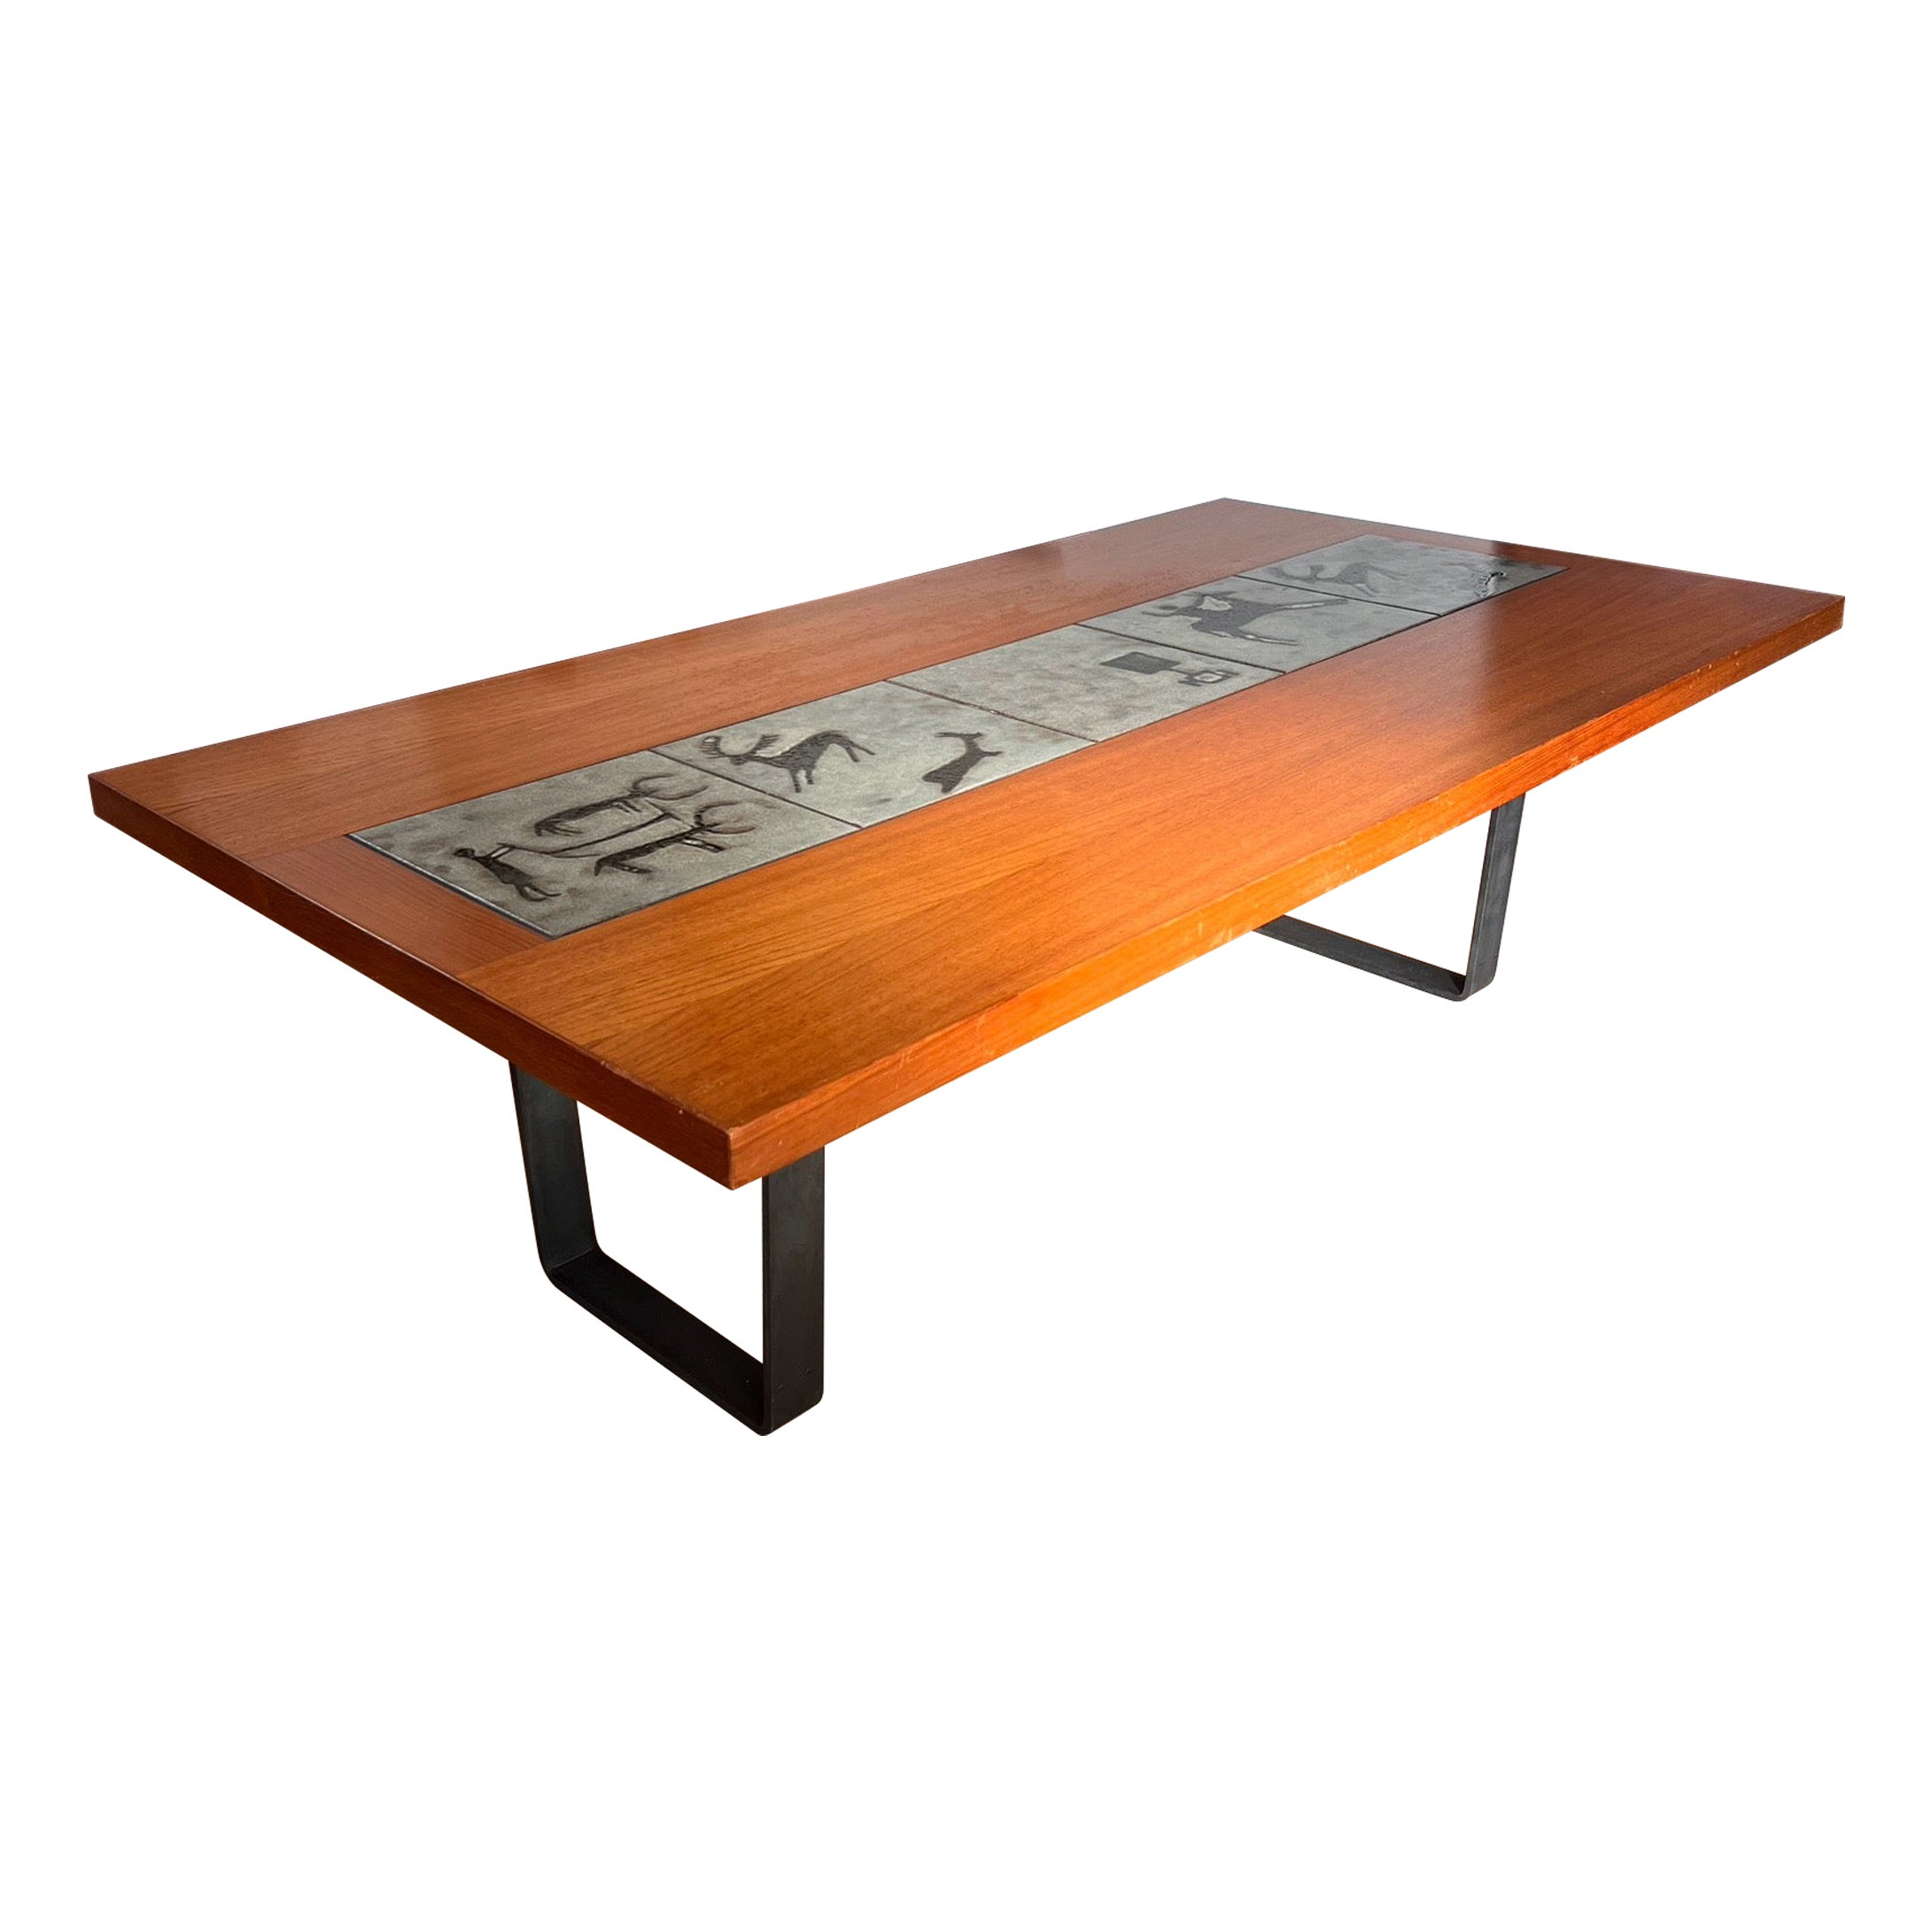 Danish modern teak coffee table with prehistoric tile inlay, 1960s For Sale